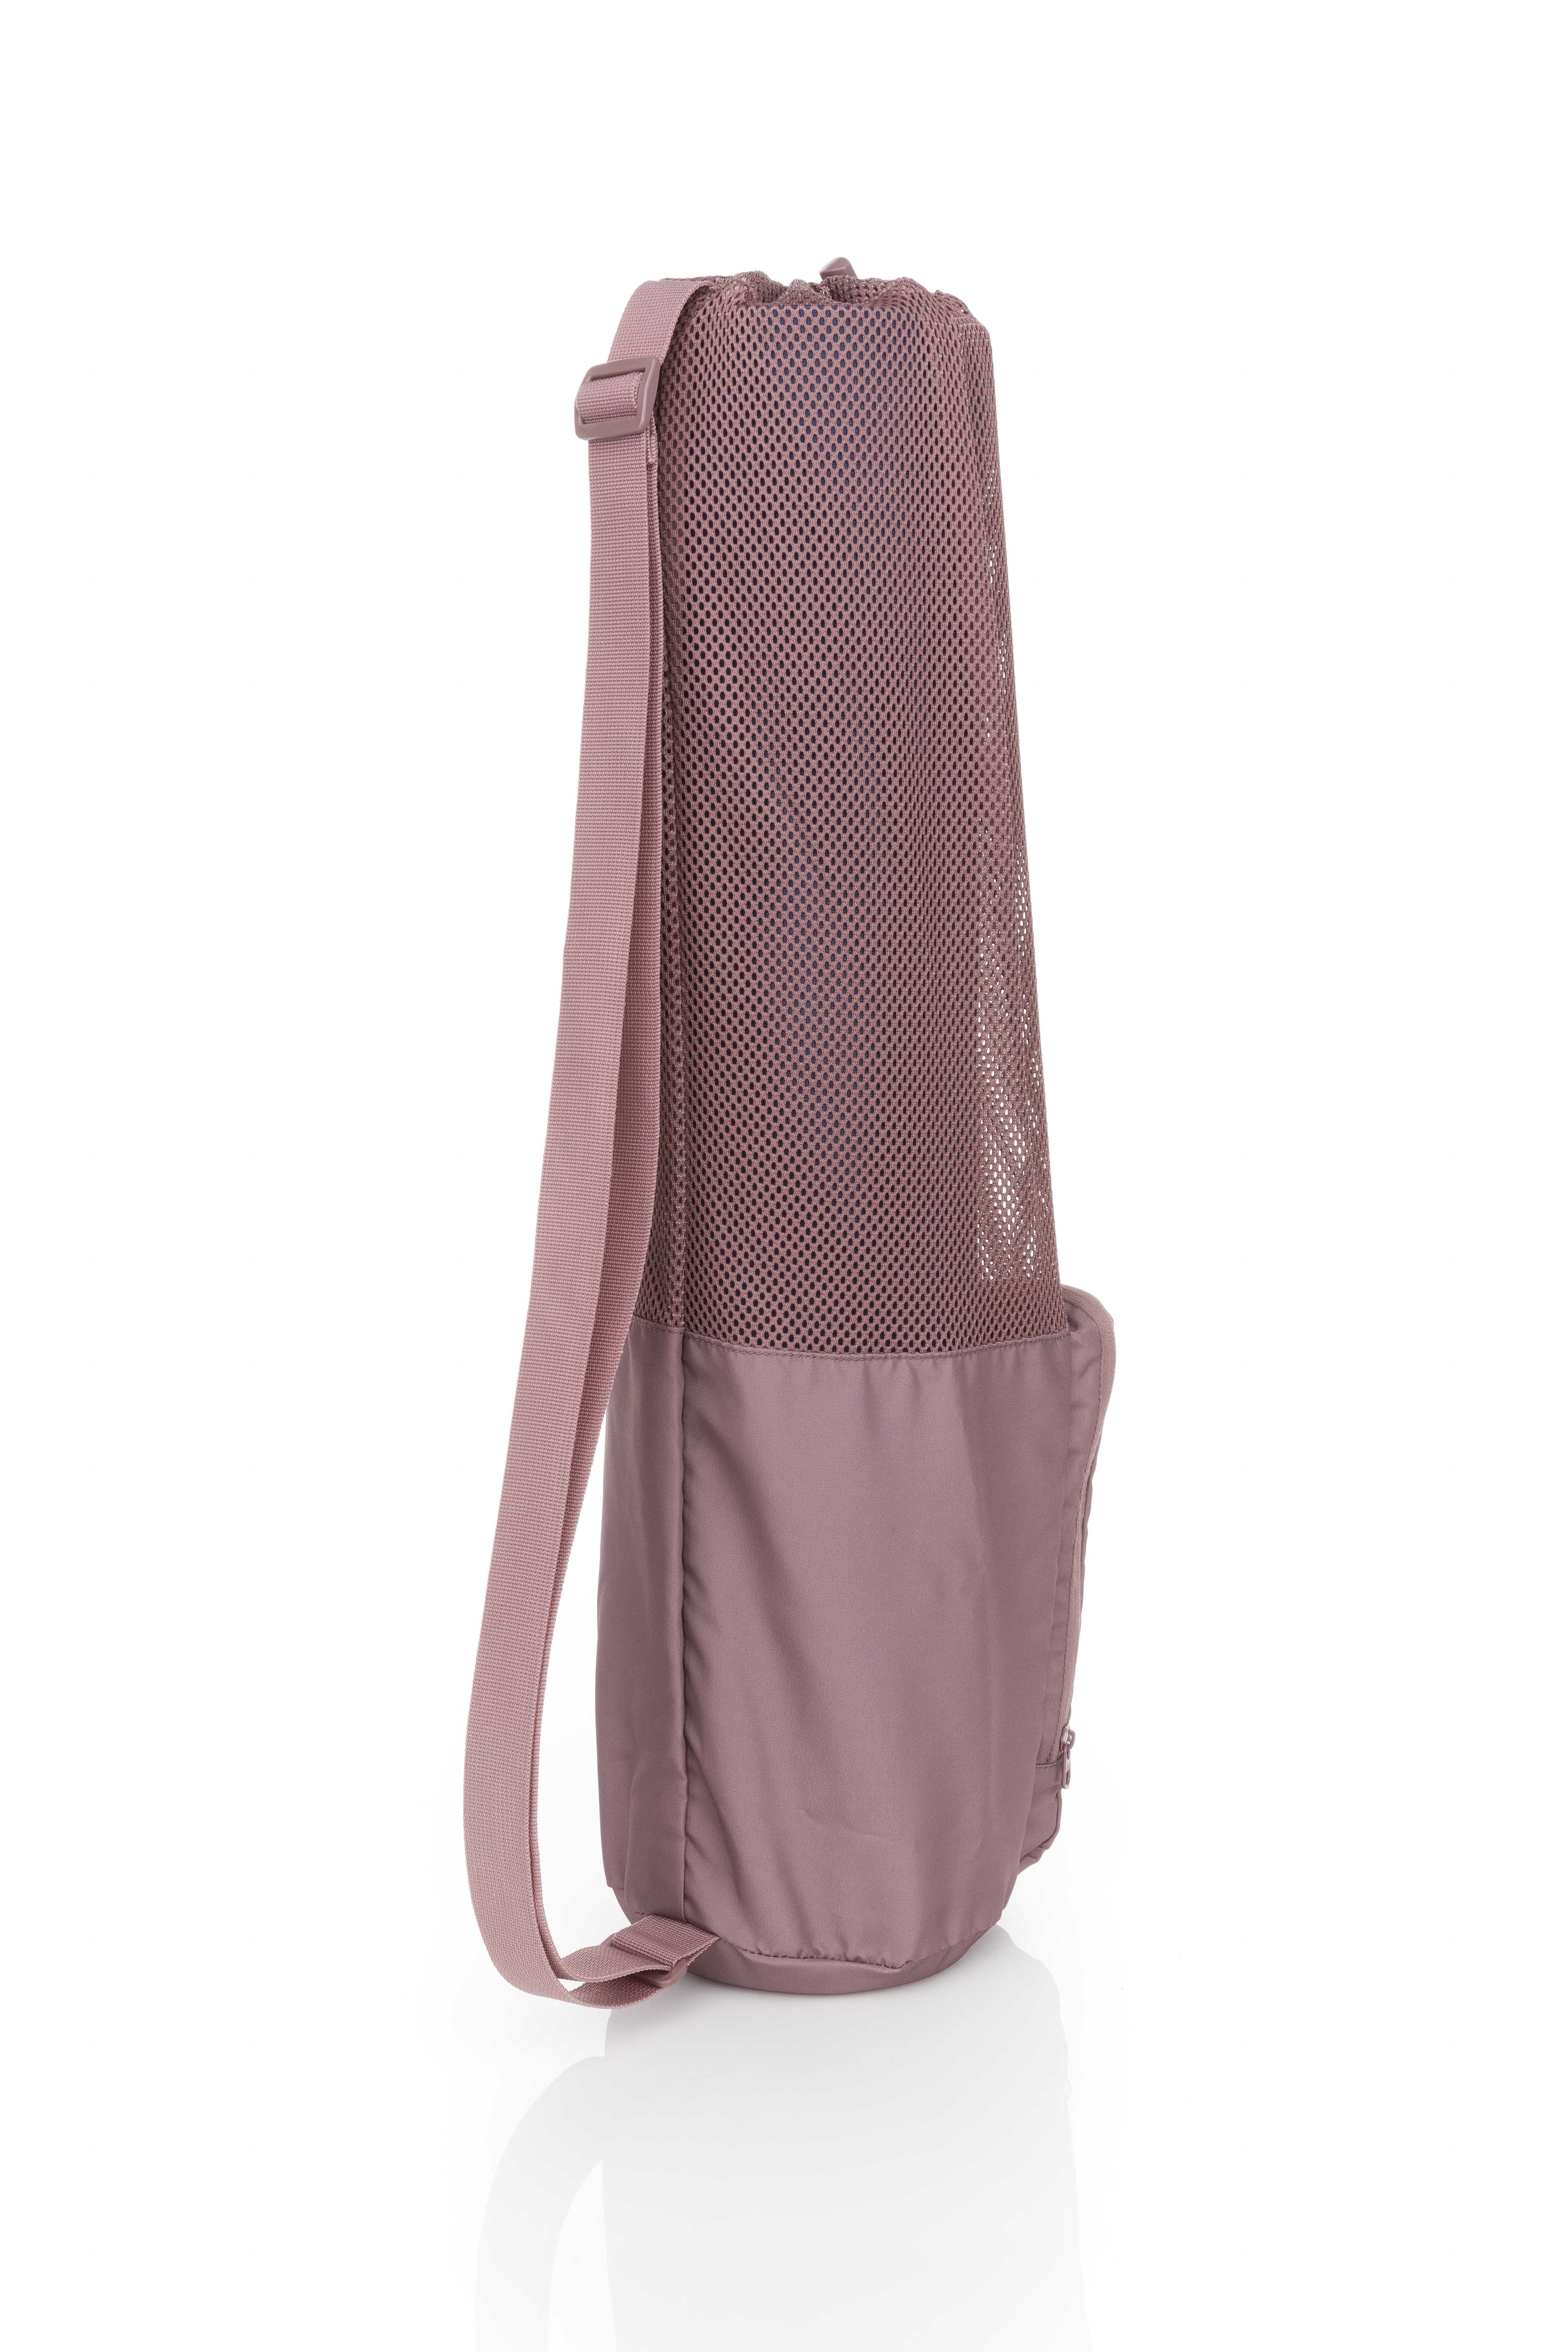 Avia 20 Liter Midnight Mauve Yoga Mat Carry Sports Bag, Unisex, Polyester 